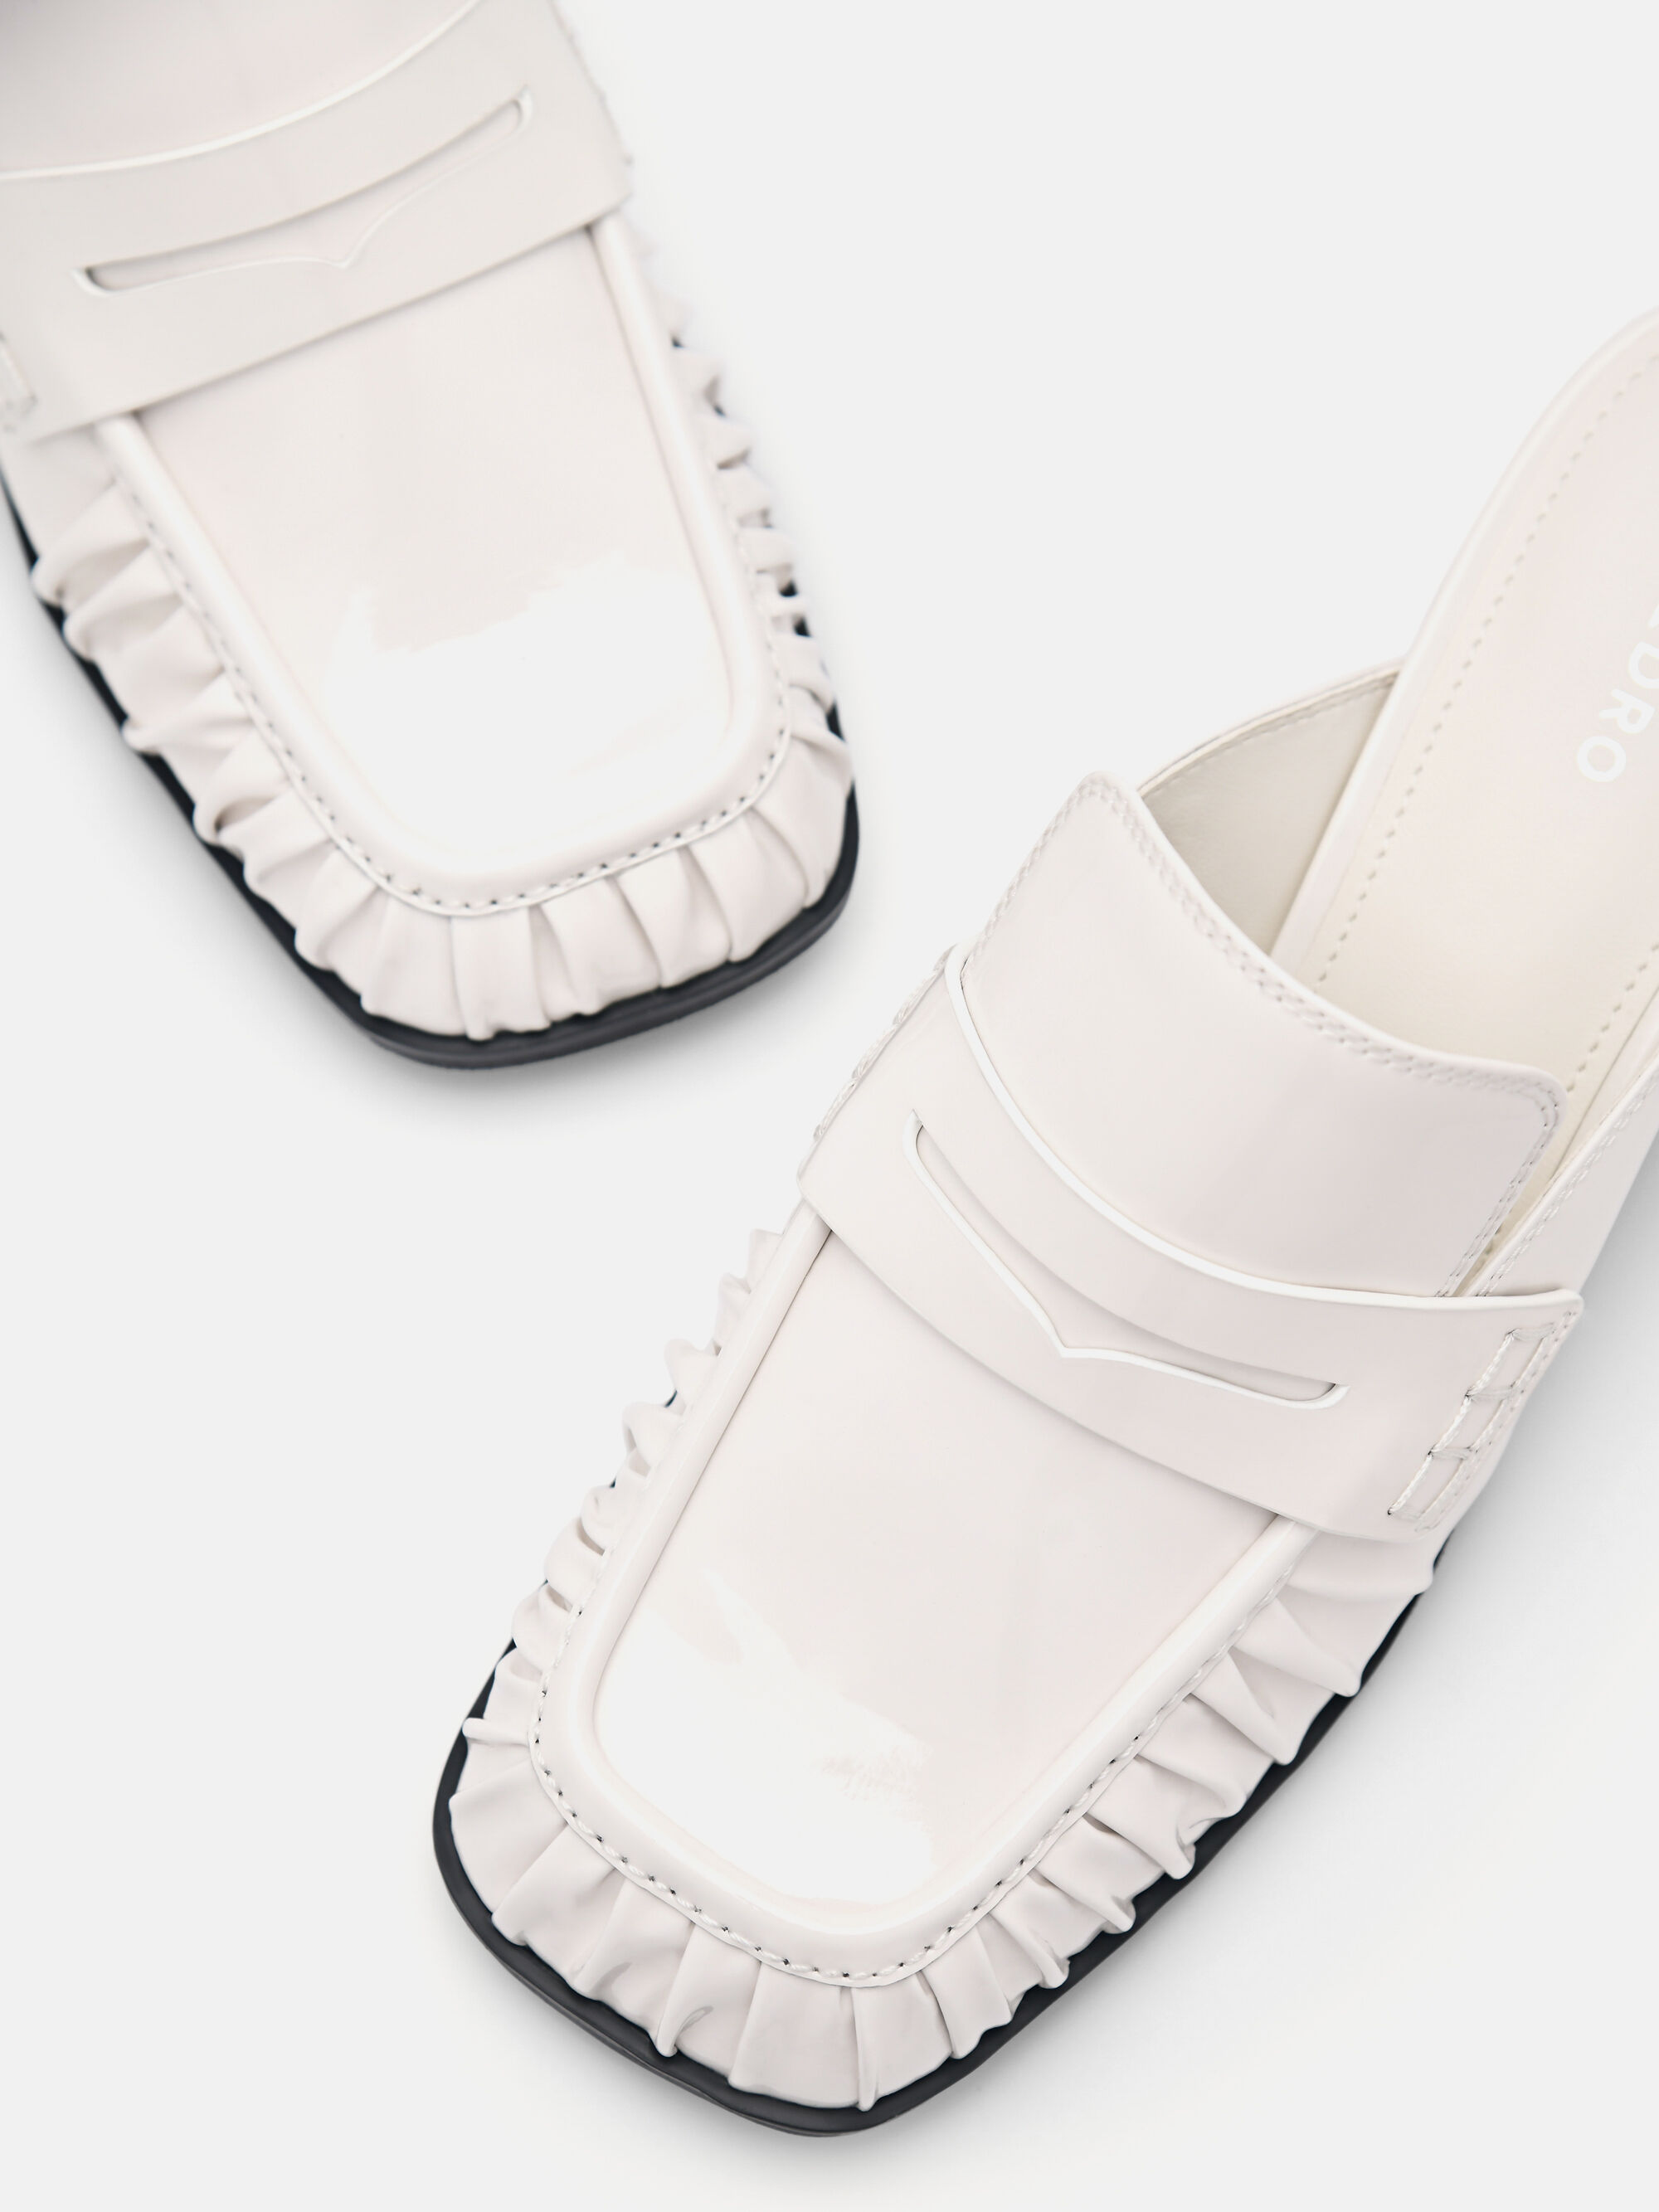 Carmen Leather Heel Mules, White